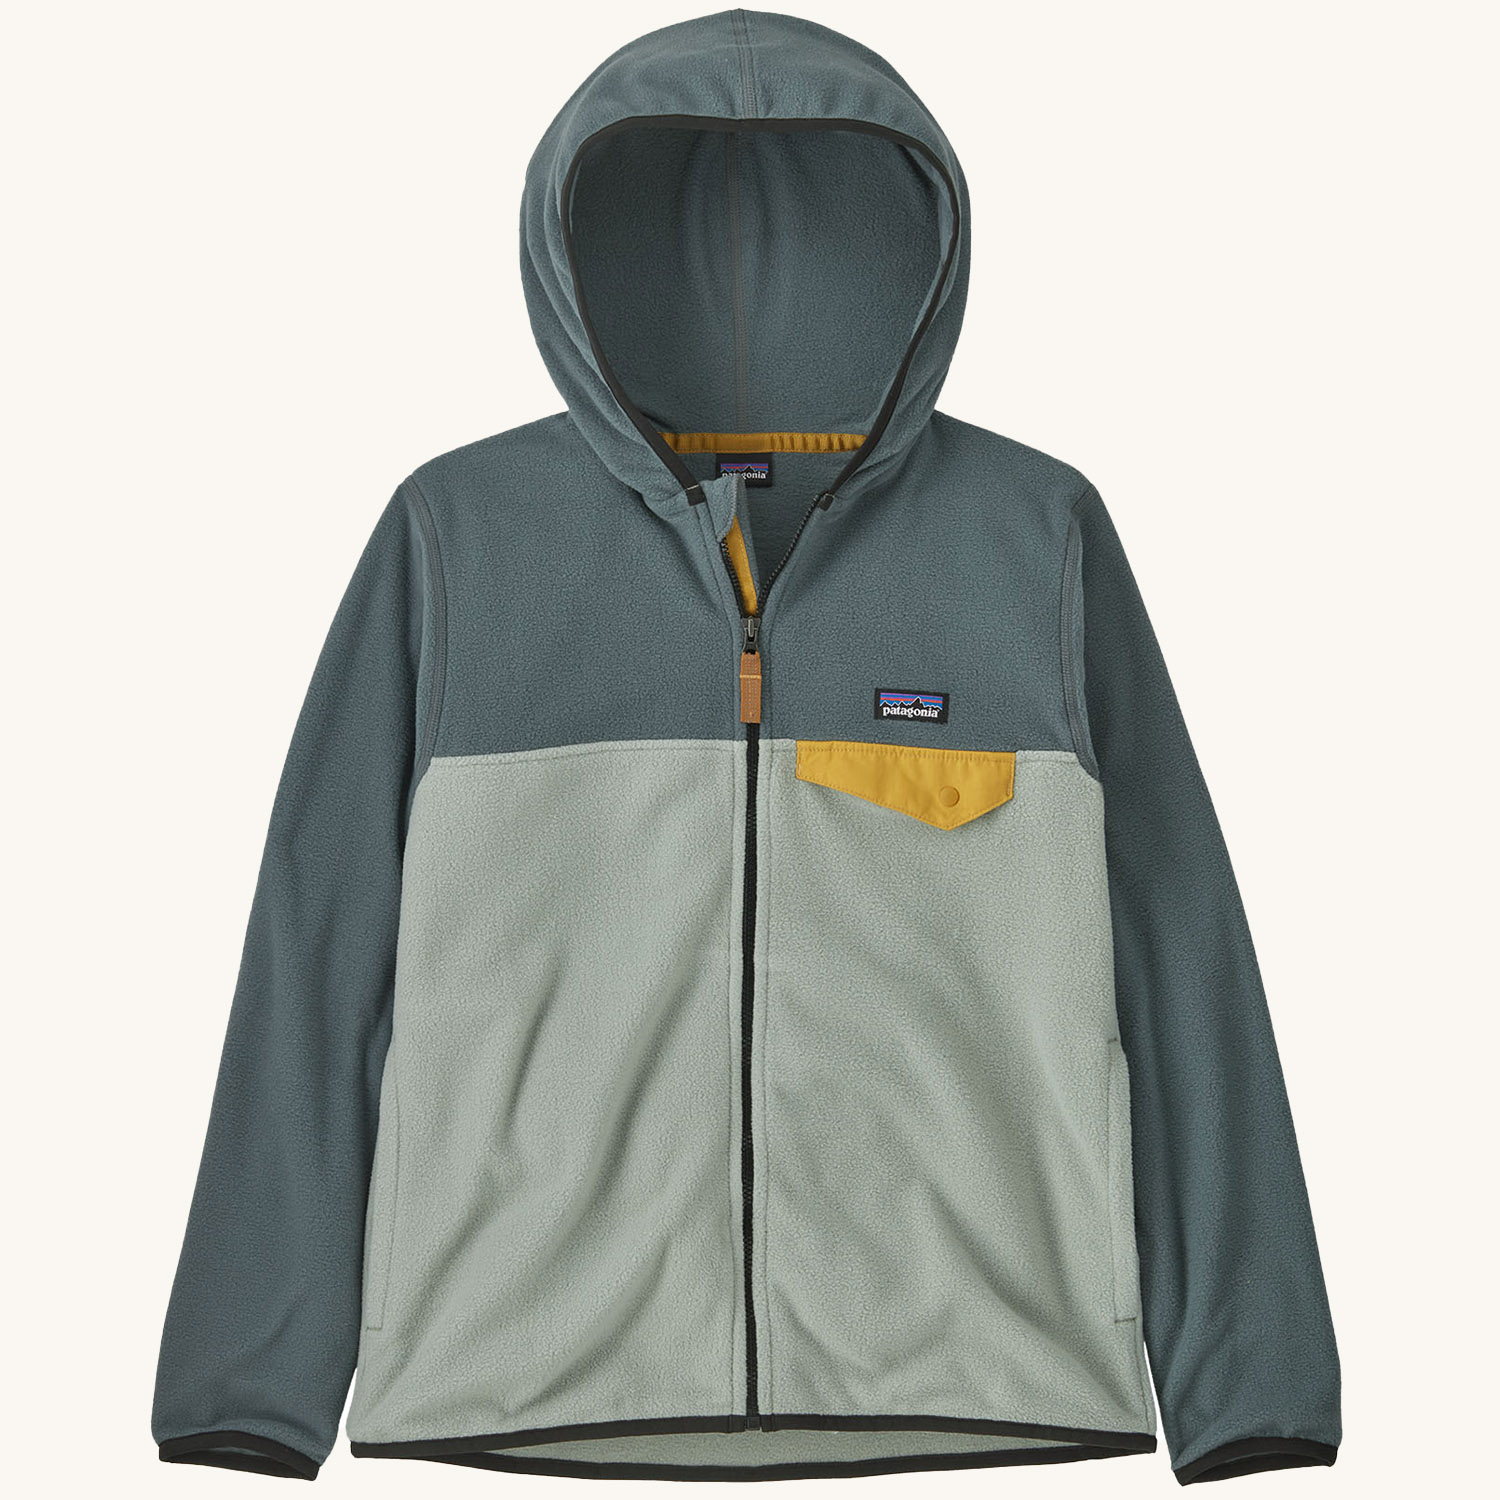 Girls Patagonia Micro Fleece Zip Jacket Small 7-8